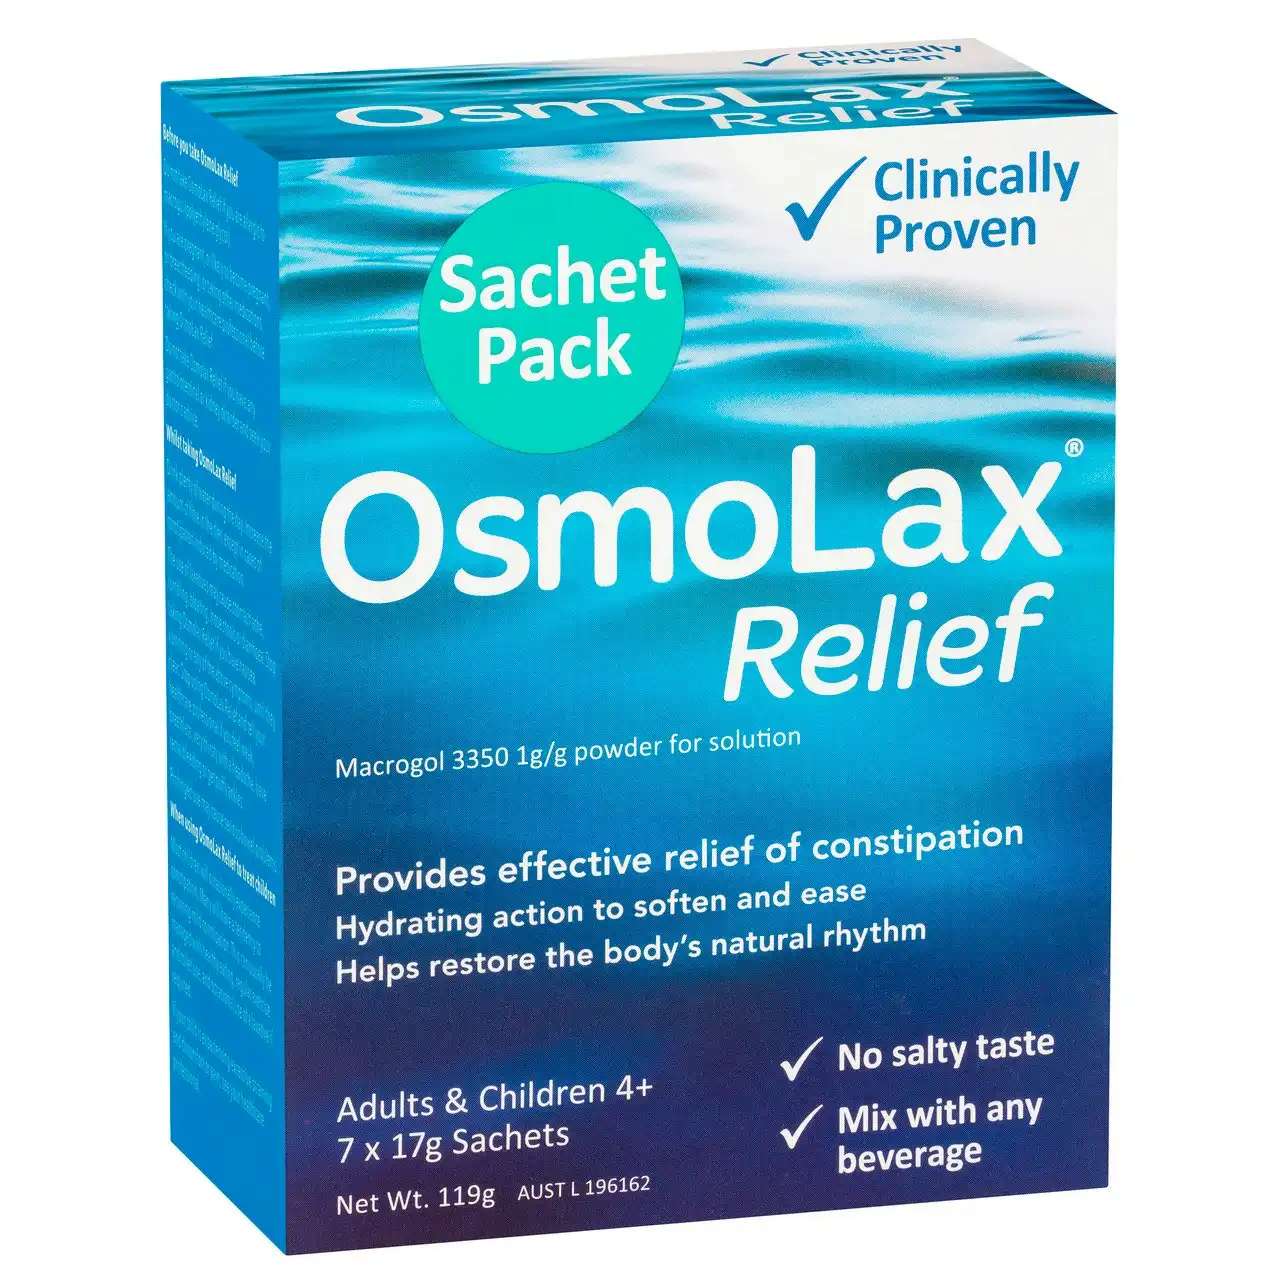 OsmoLax(R) Relief Sachet Pack 7x17g